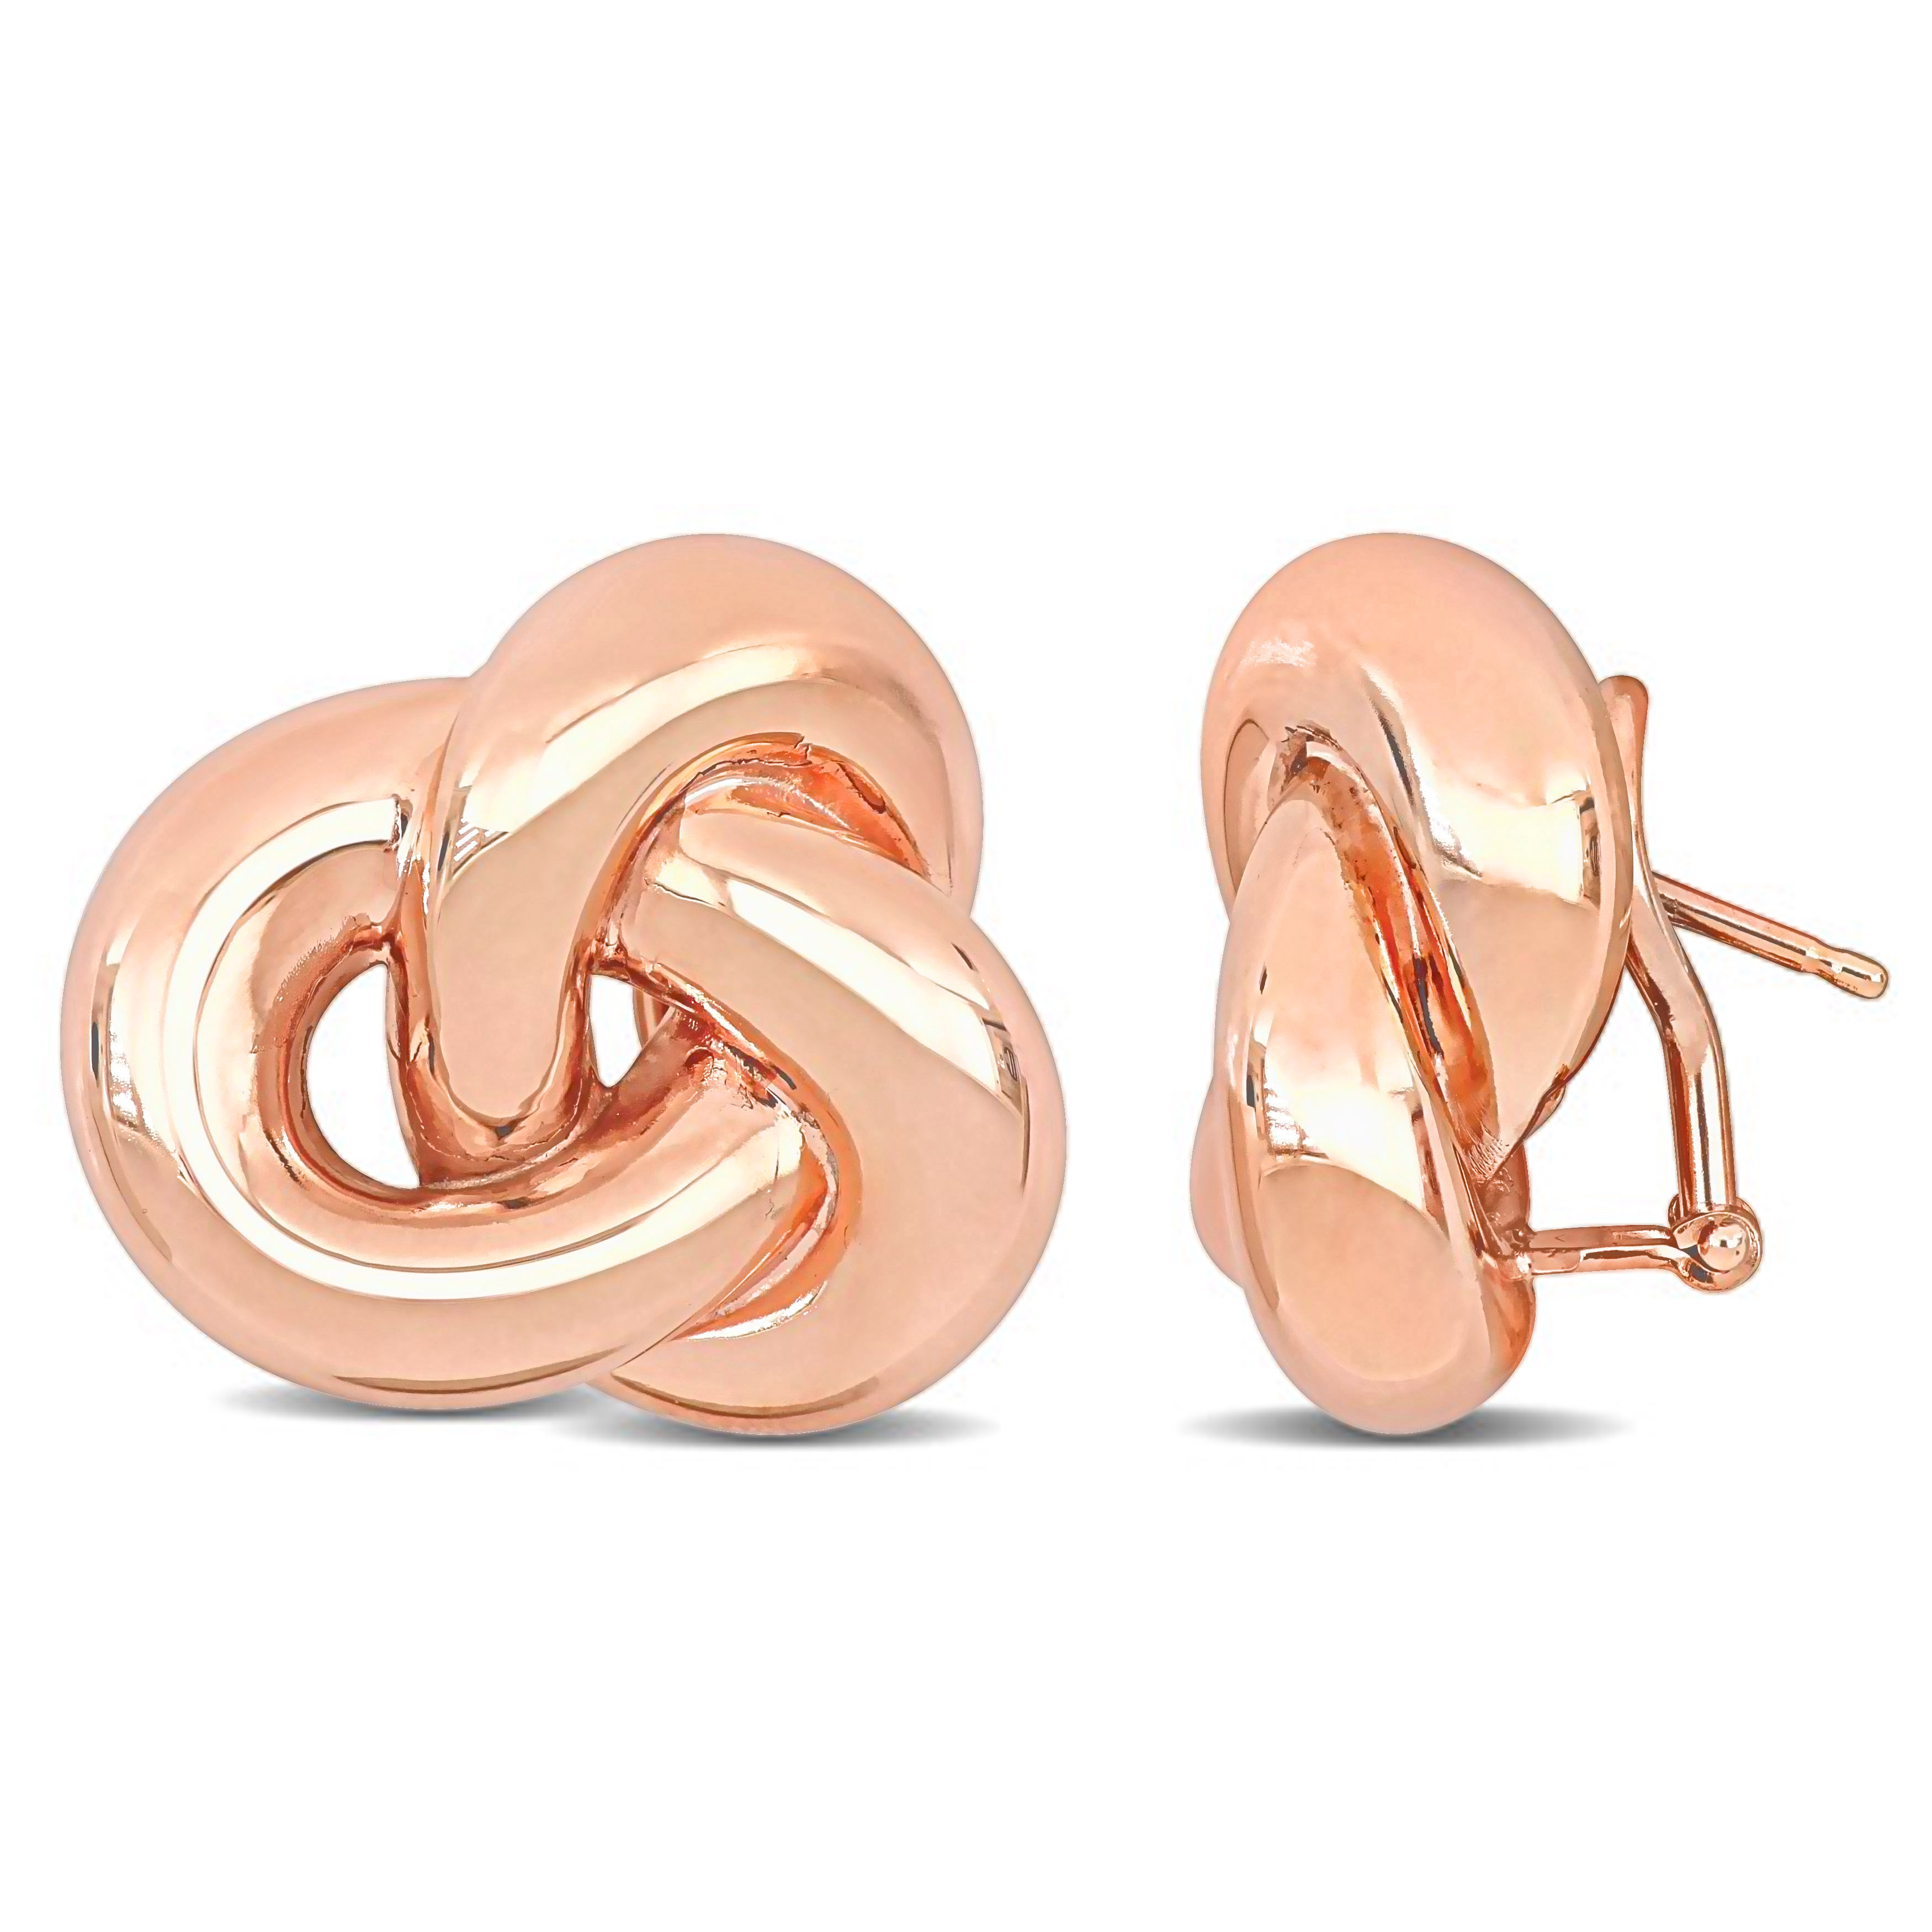 17 MM Love Knot Earrings in 14k Rose Gold